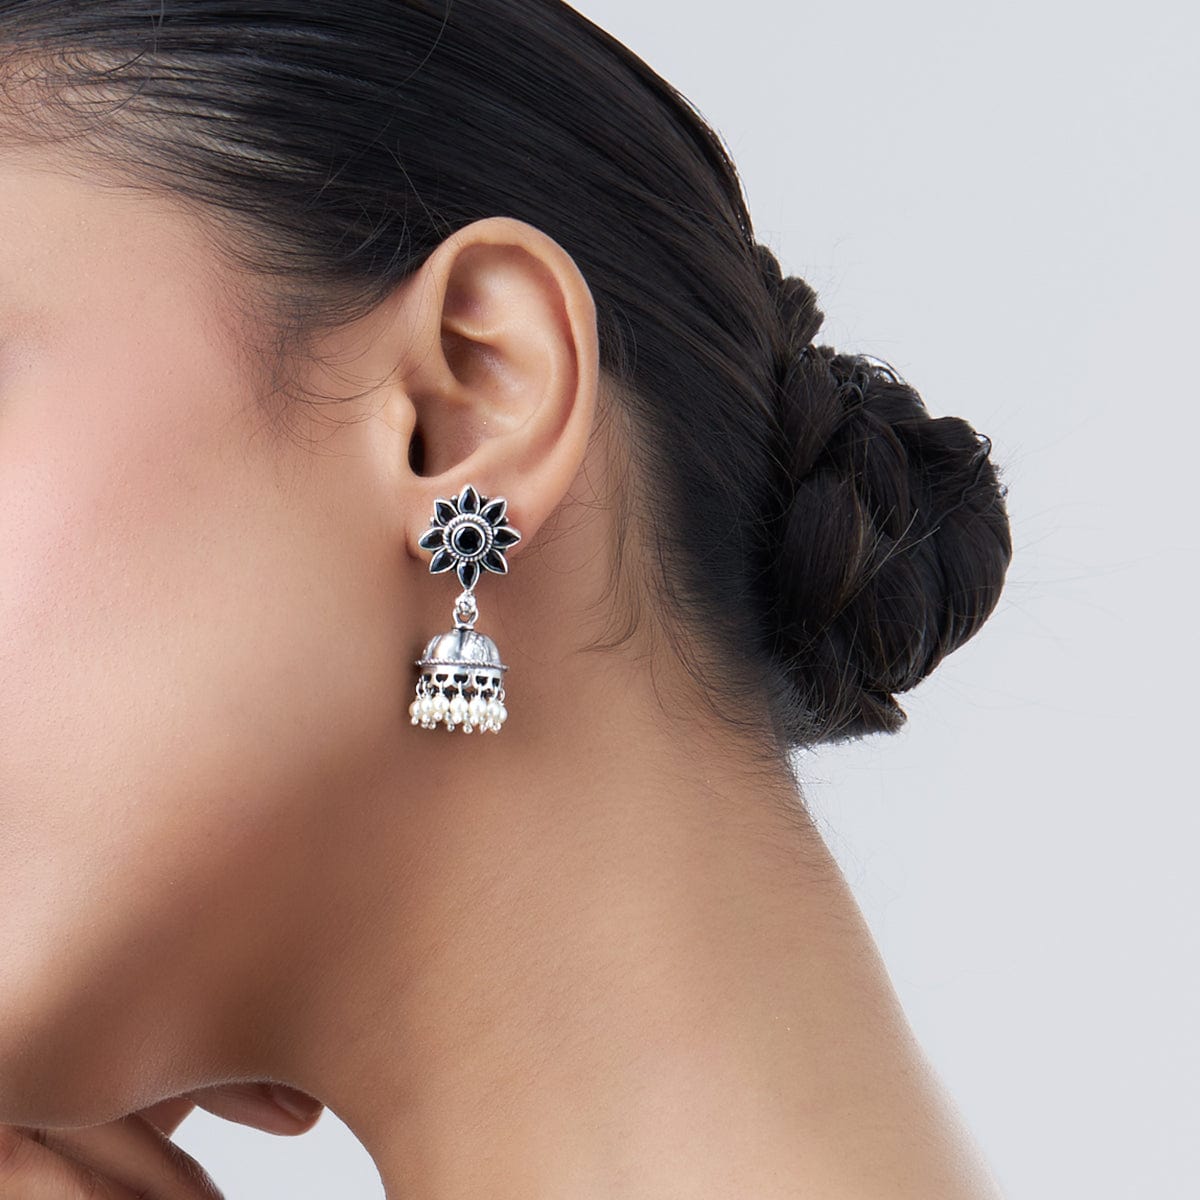 Indian Traditional Bollywood Style Silver Oxidized Jhumka Jhumki Earrings  M-30 | eBay